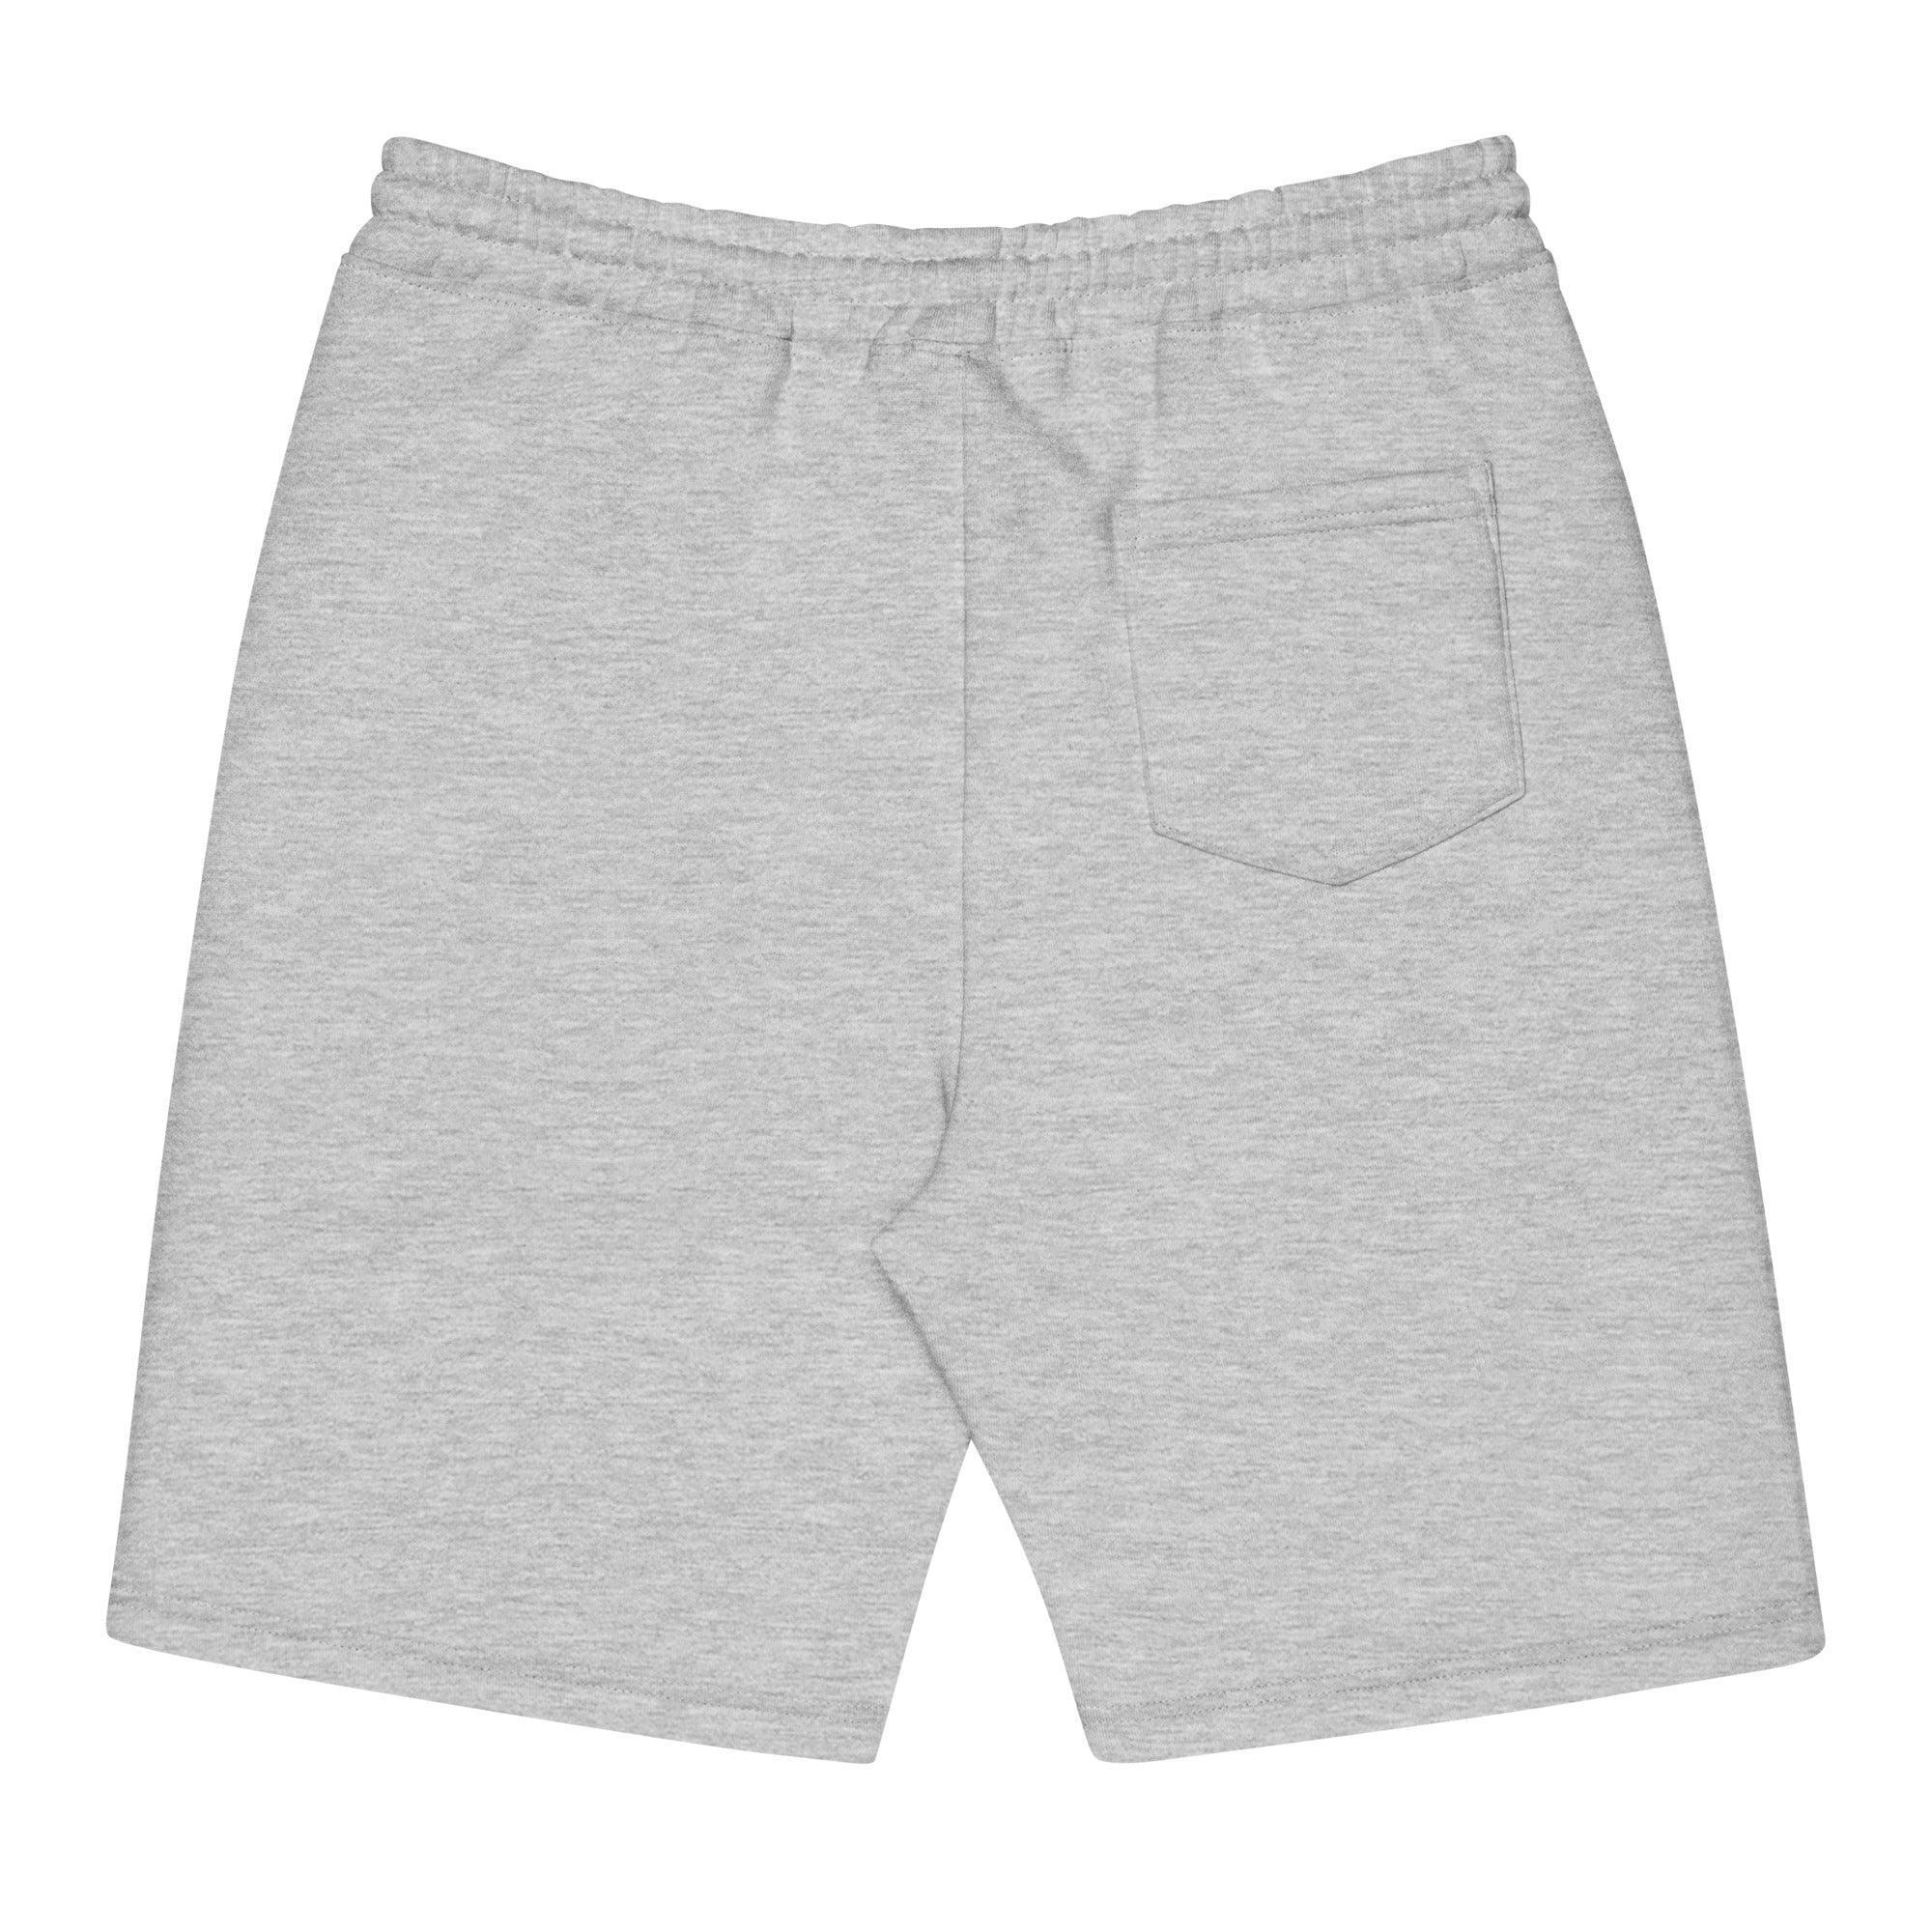 Kangaroo Market Fleece Shorts - InvestmenTees